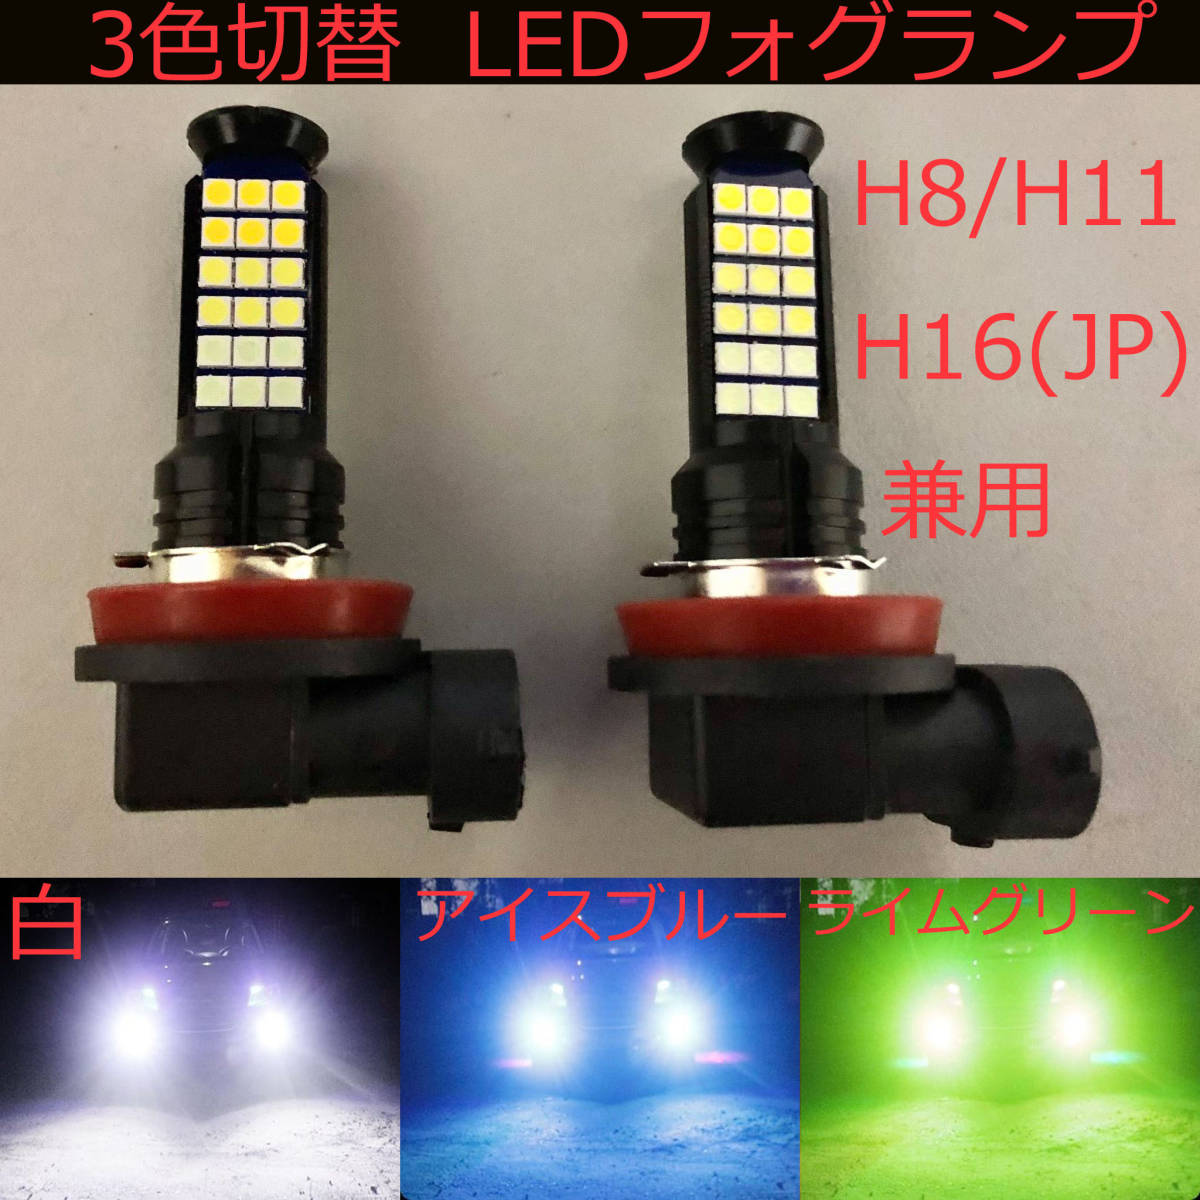 LEDフォグランプ 2個セット H8/H11/H16(国産車)兼用 ホワイト/アイスブルー/ライムグリーン3色切替 トライカラー ledフォグライト_画像1